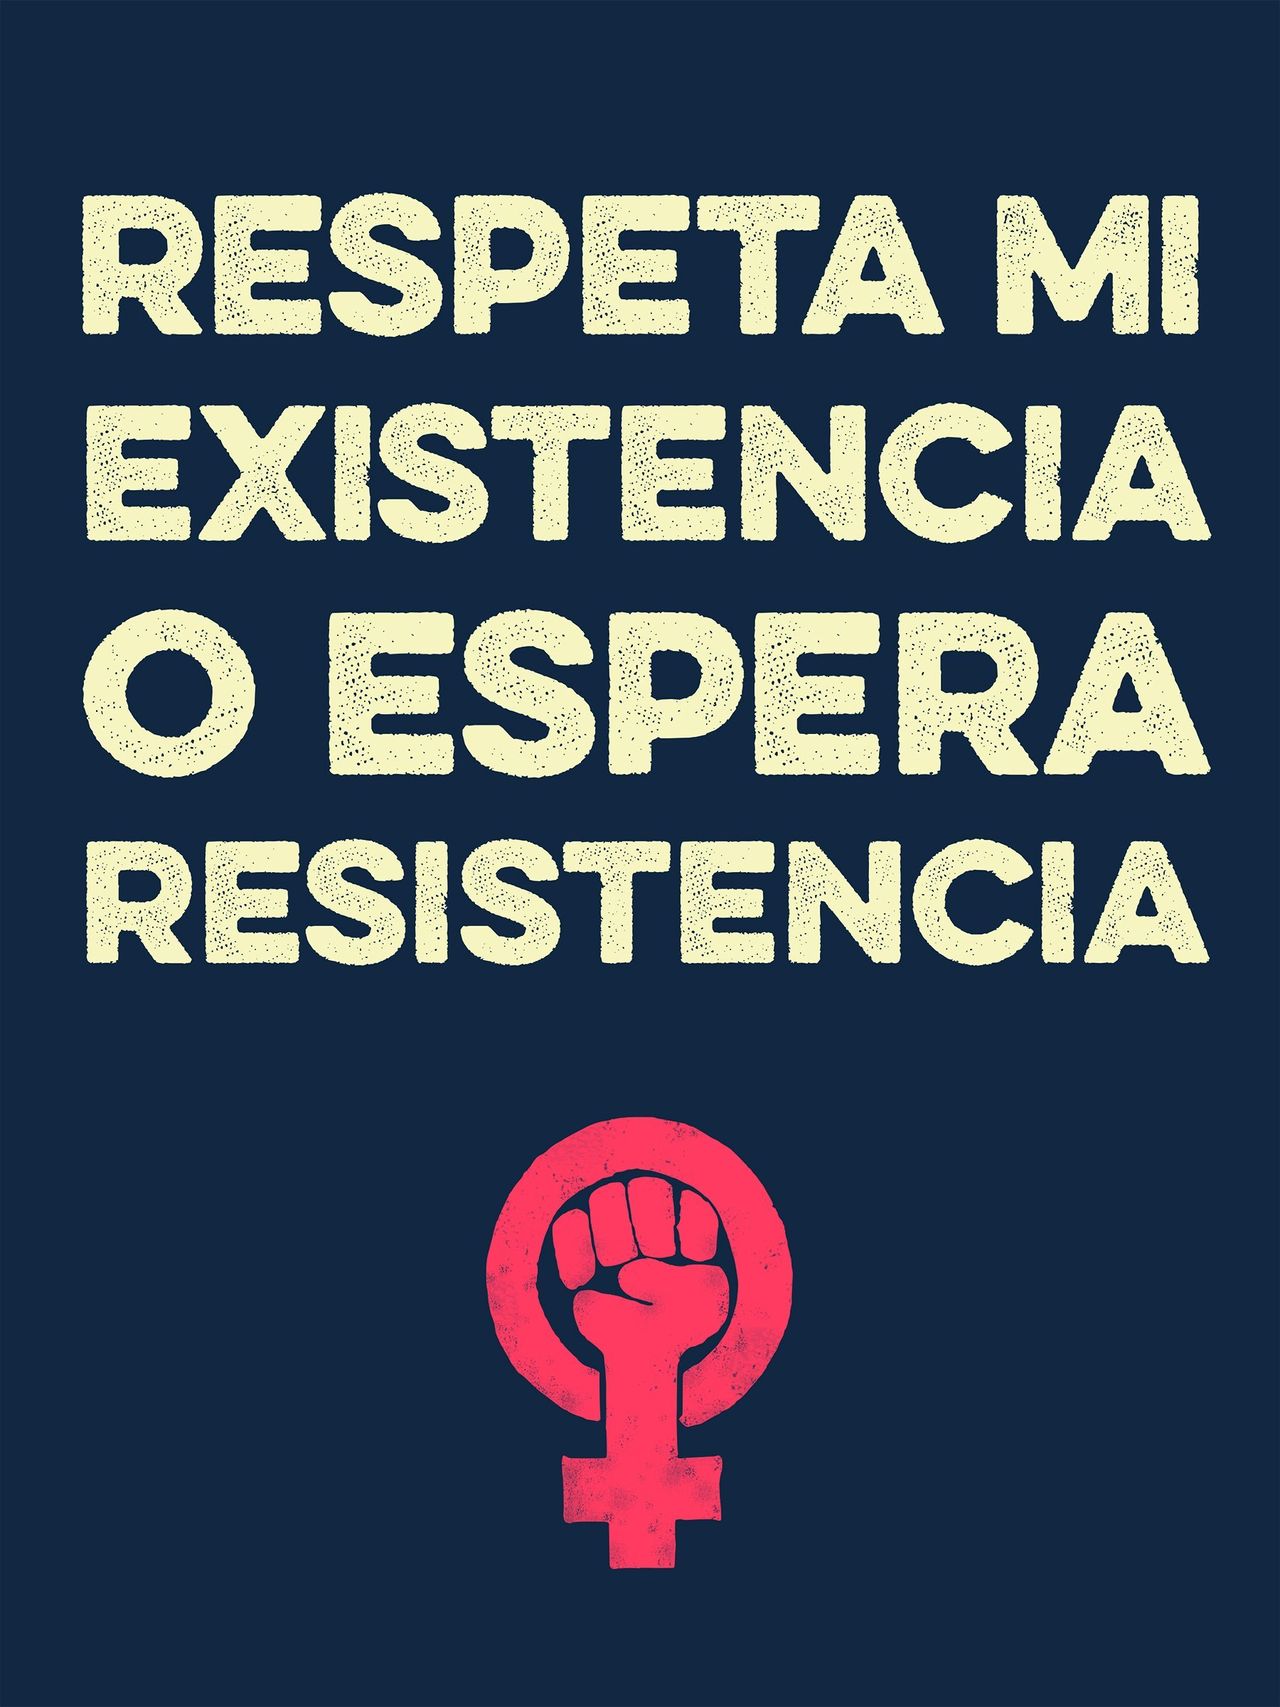 "Respecta" by Victoria Garcia